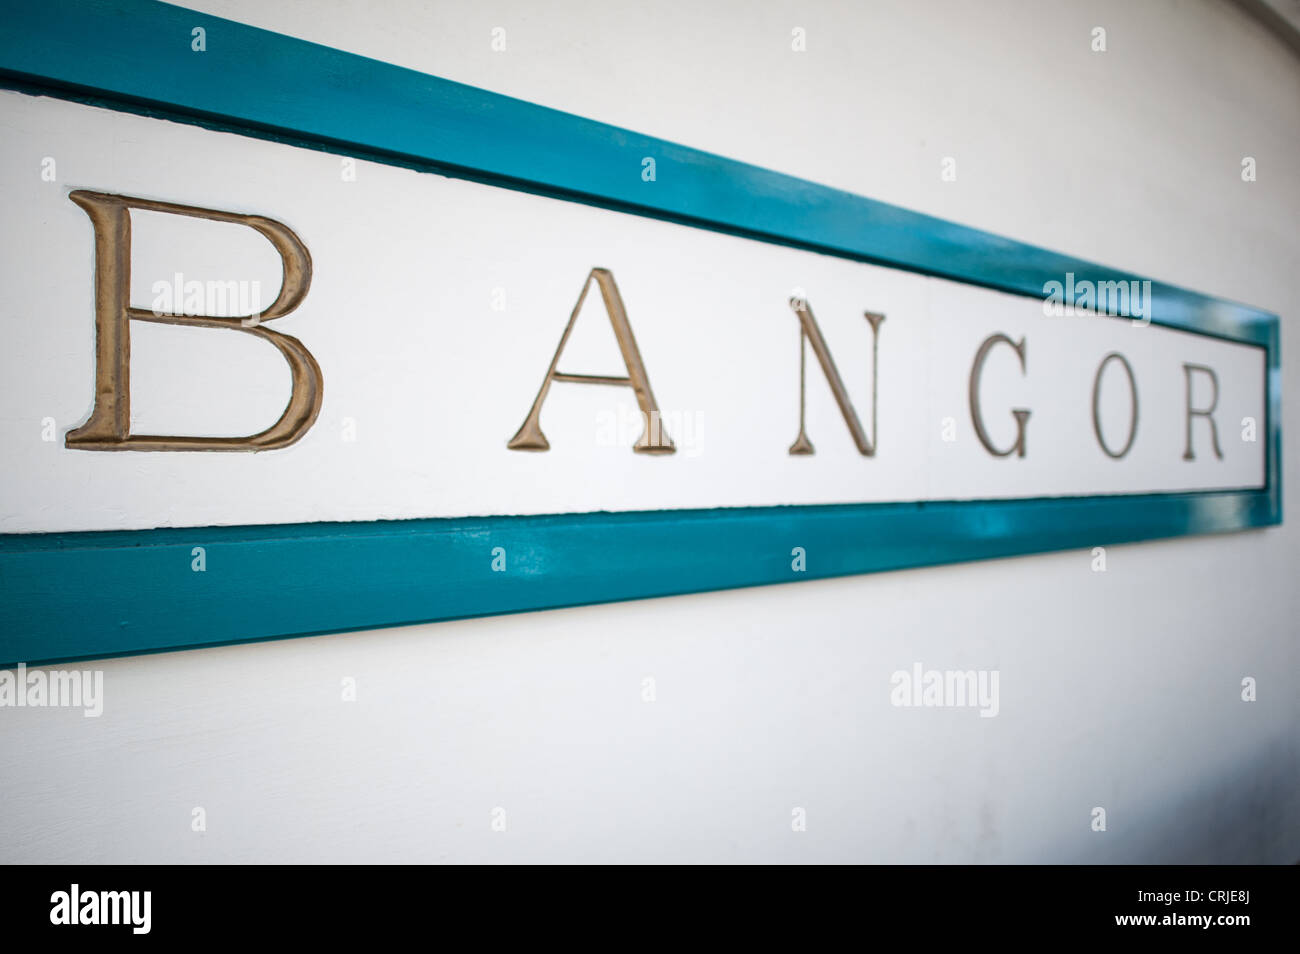 BANGOR, Wales - Place name sign at Bangor Railway Station in northwest Wales, UK. Stock Photo